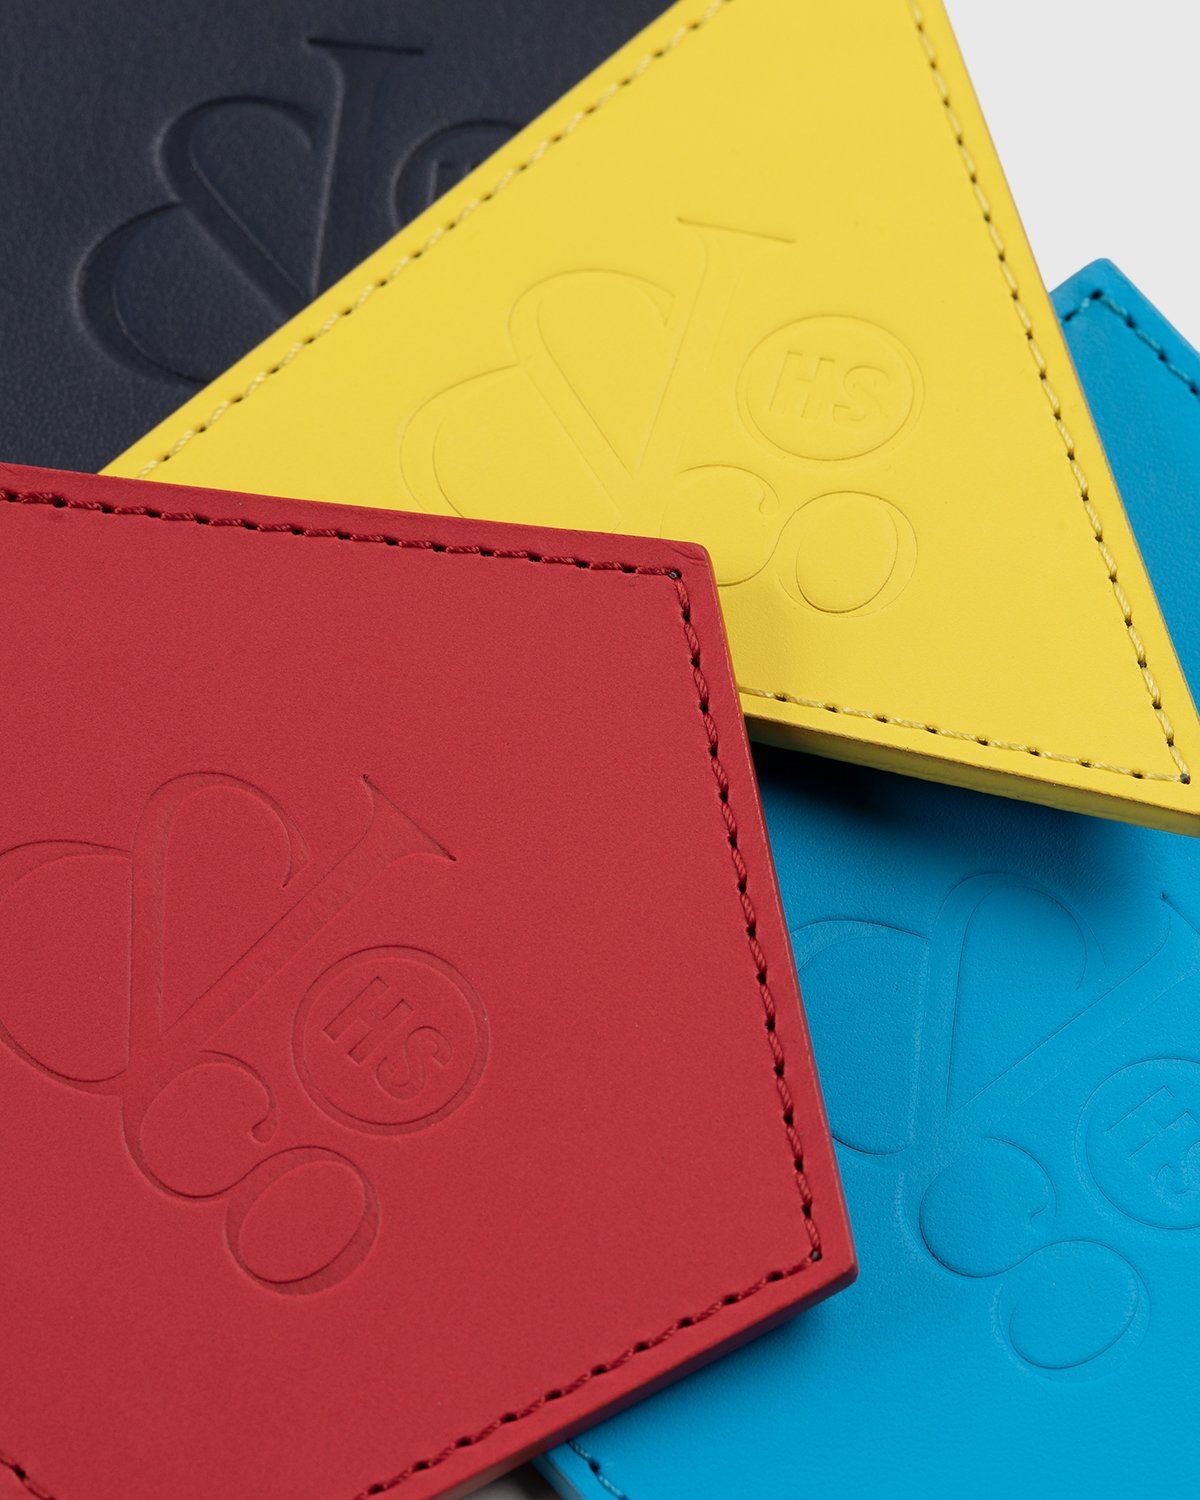 Jacob & Co. x Highsnobiety – Leather Coasters Multi - Deco - Multi - Image 4